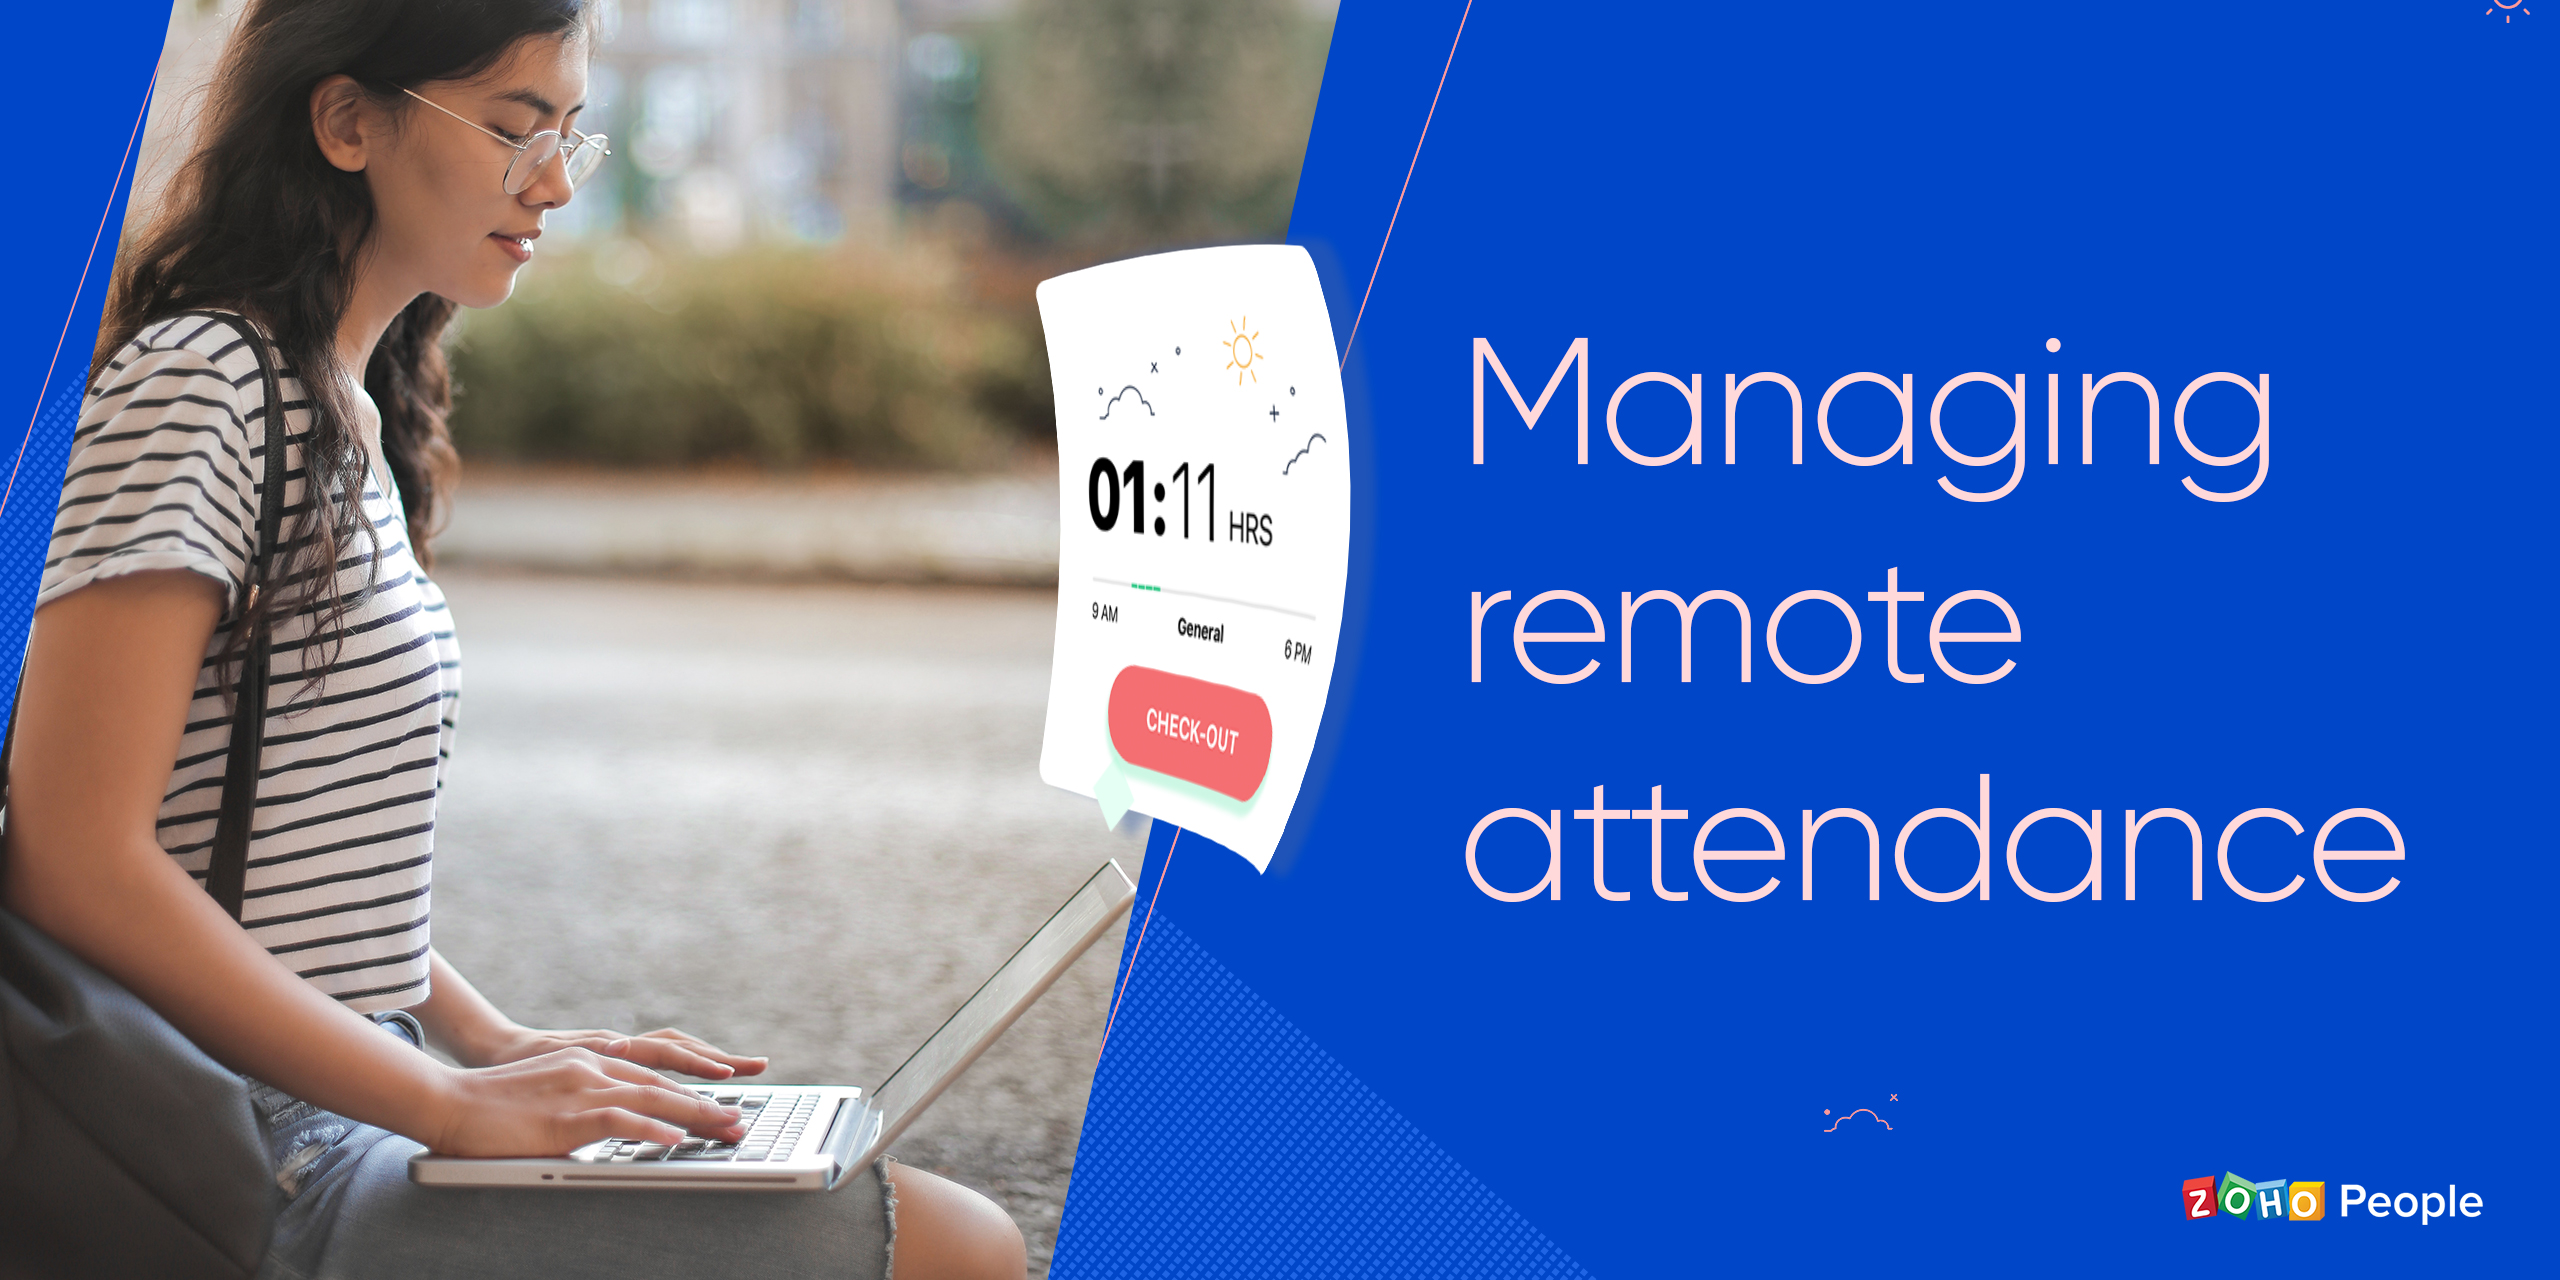 Managing remote attendance